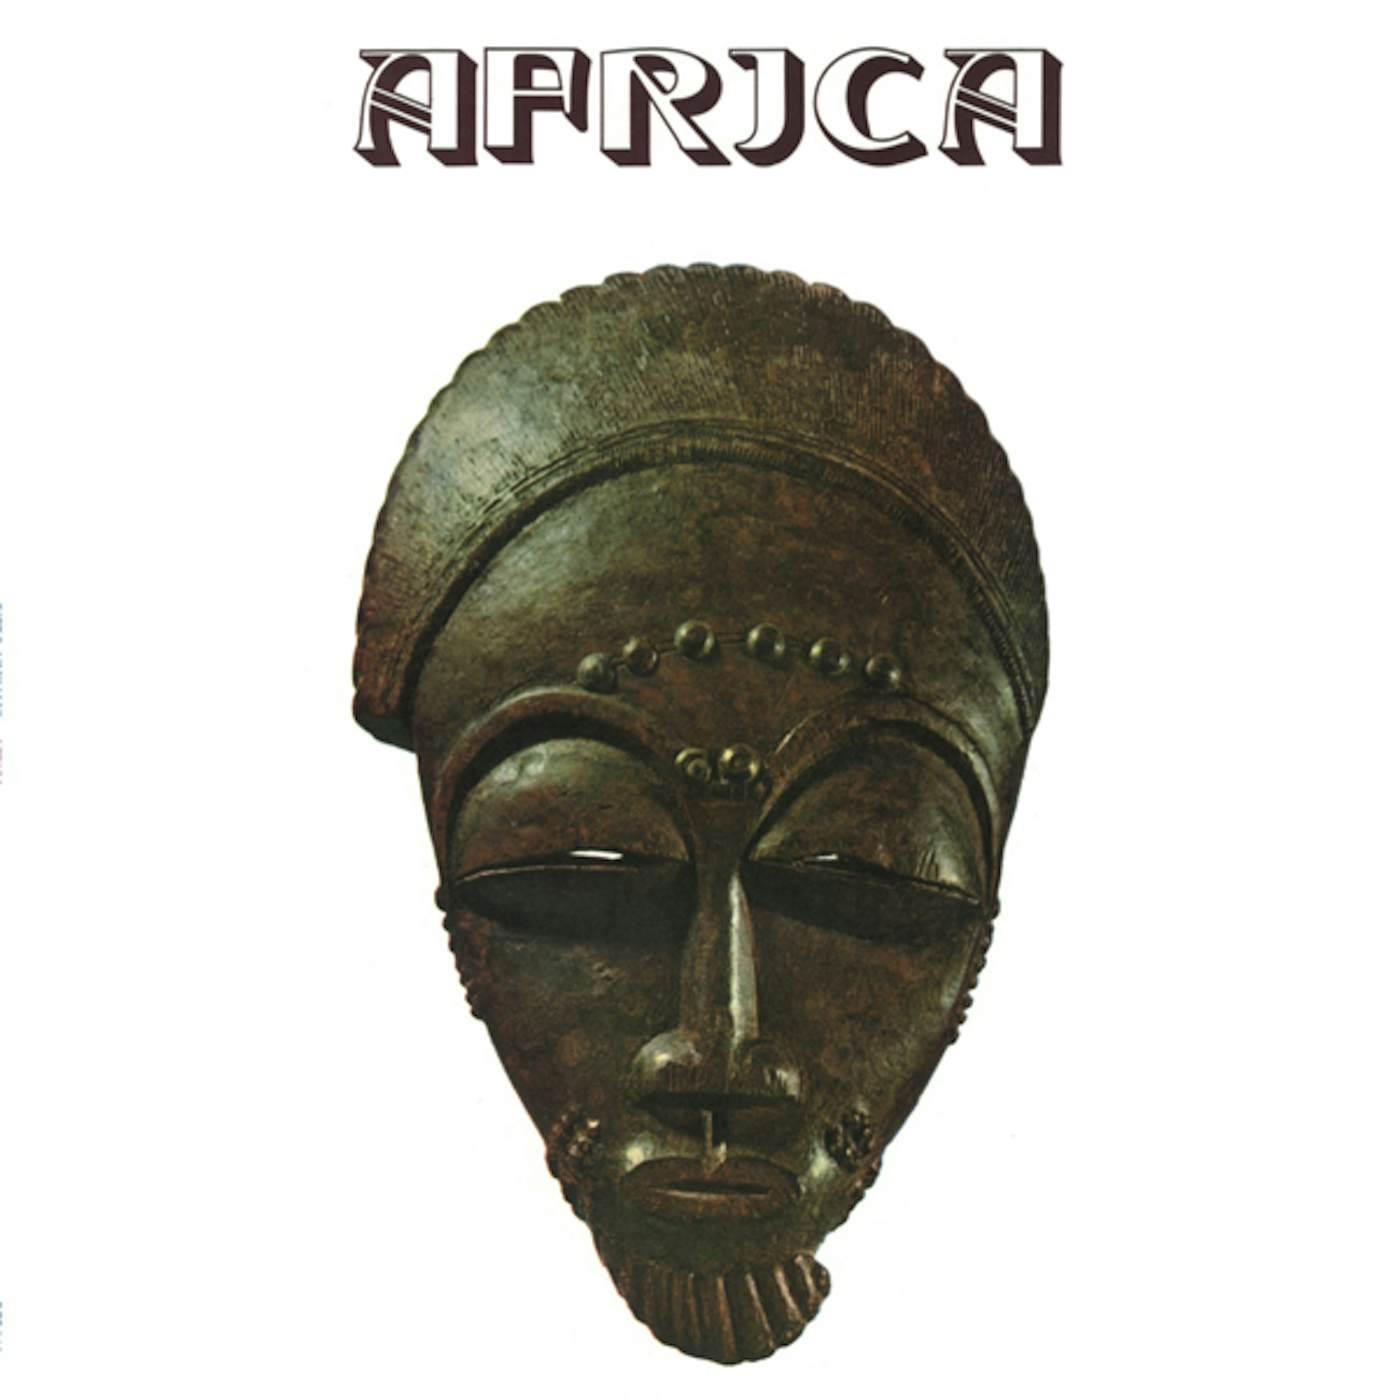 Piero Umiliani AFRICA / CONTINENTE NERO Vinyl Record